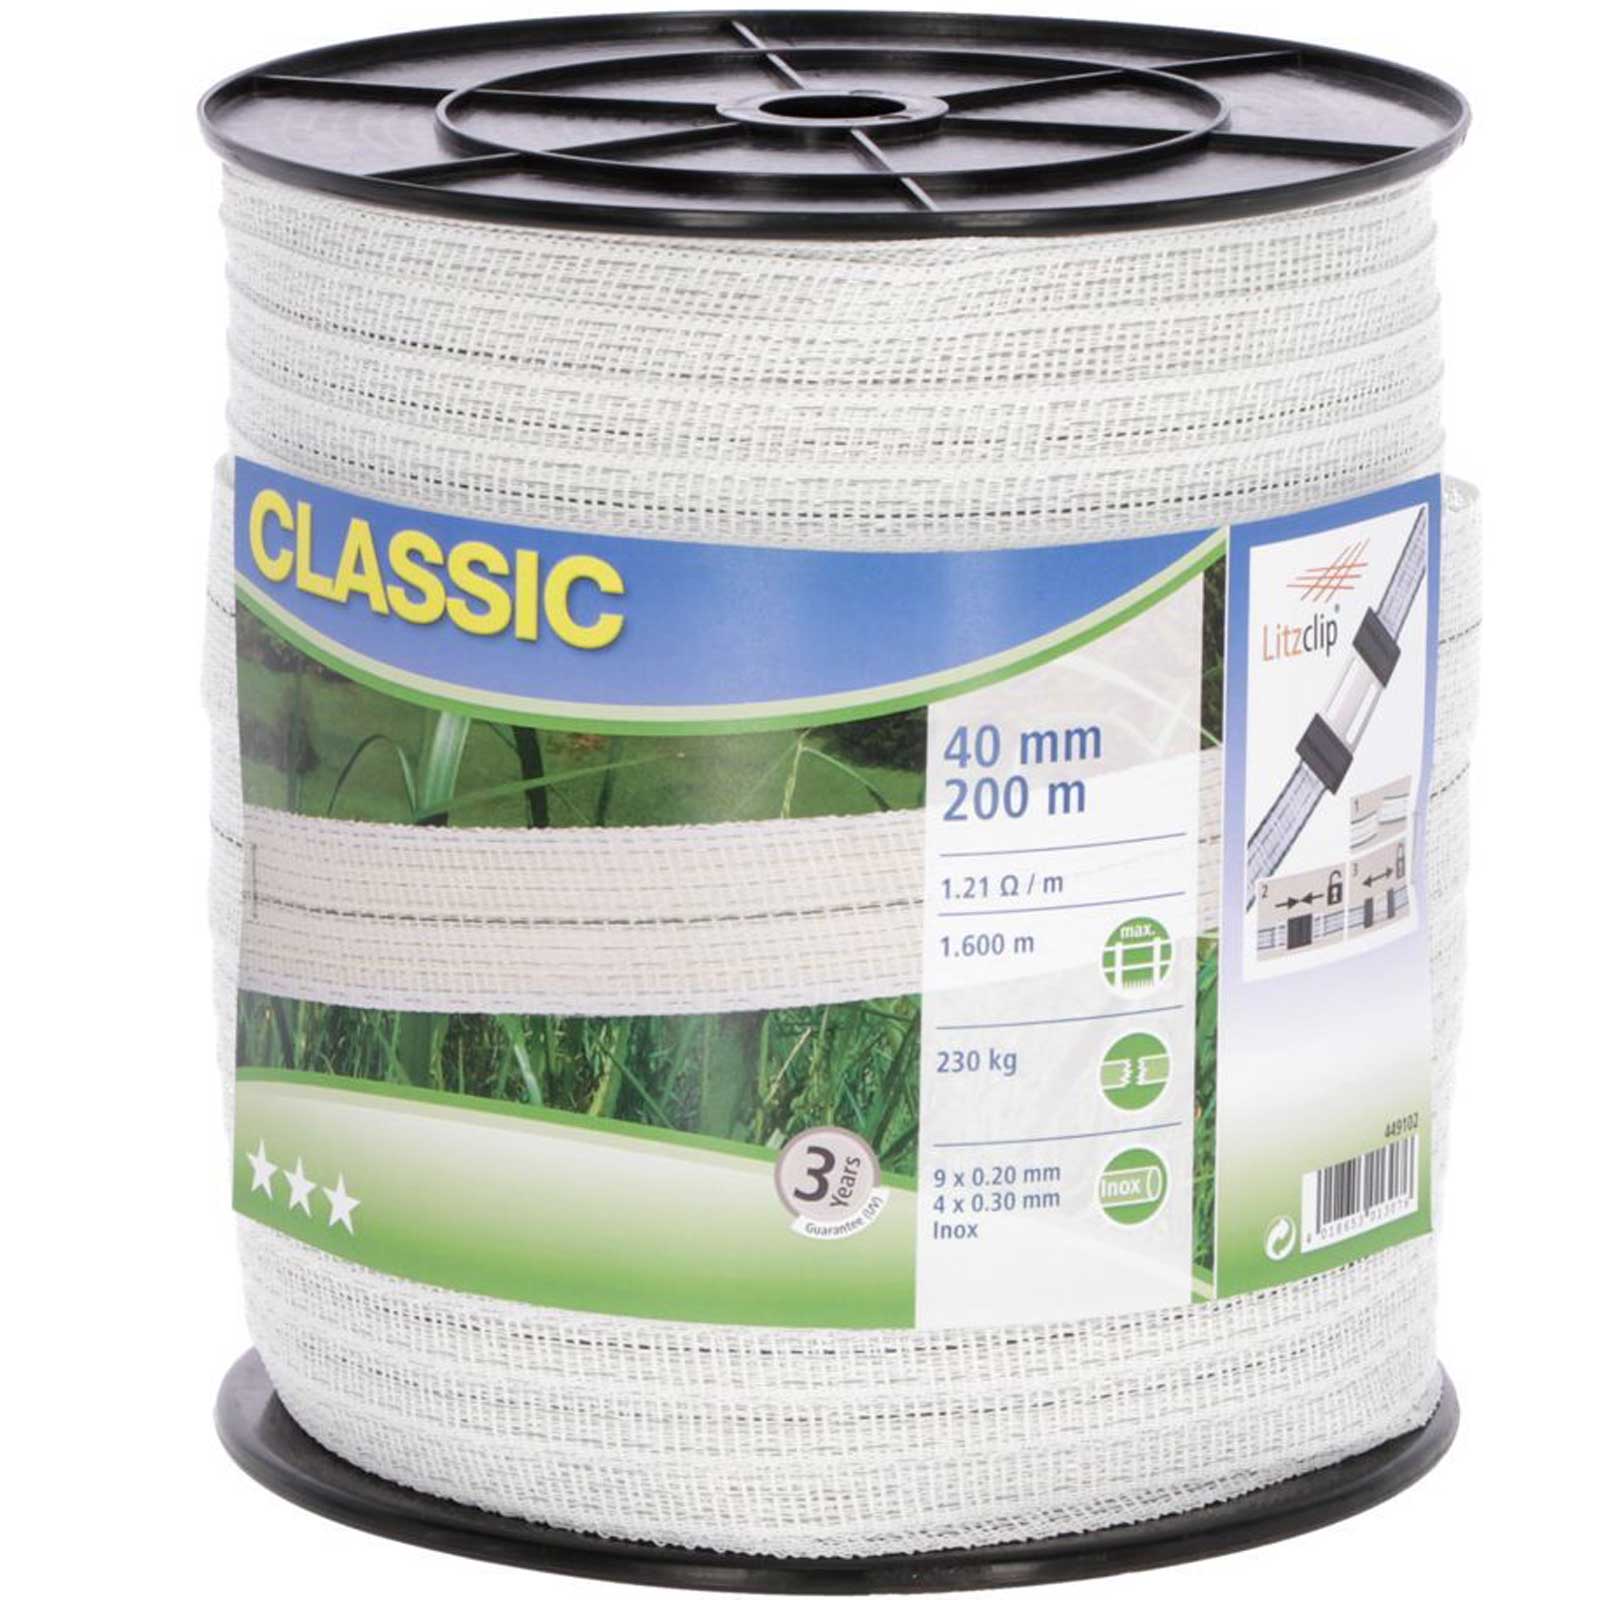 CLASSIC Fencing Tape 200m 40mm 9x0,20 + 4x0,30 Niro white